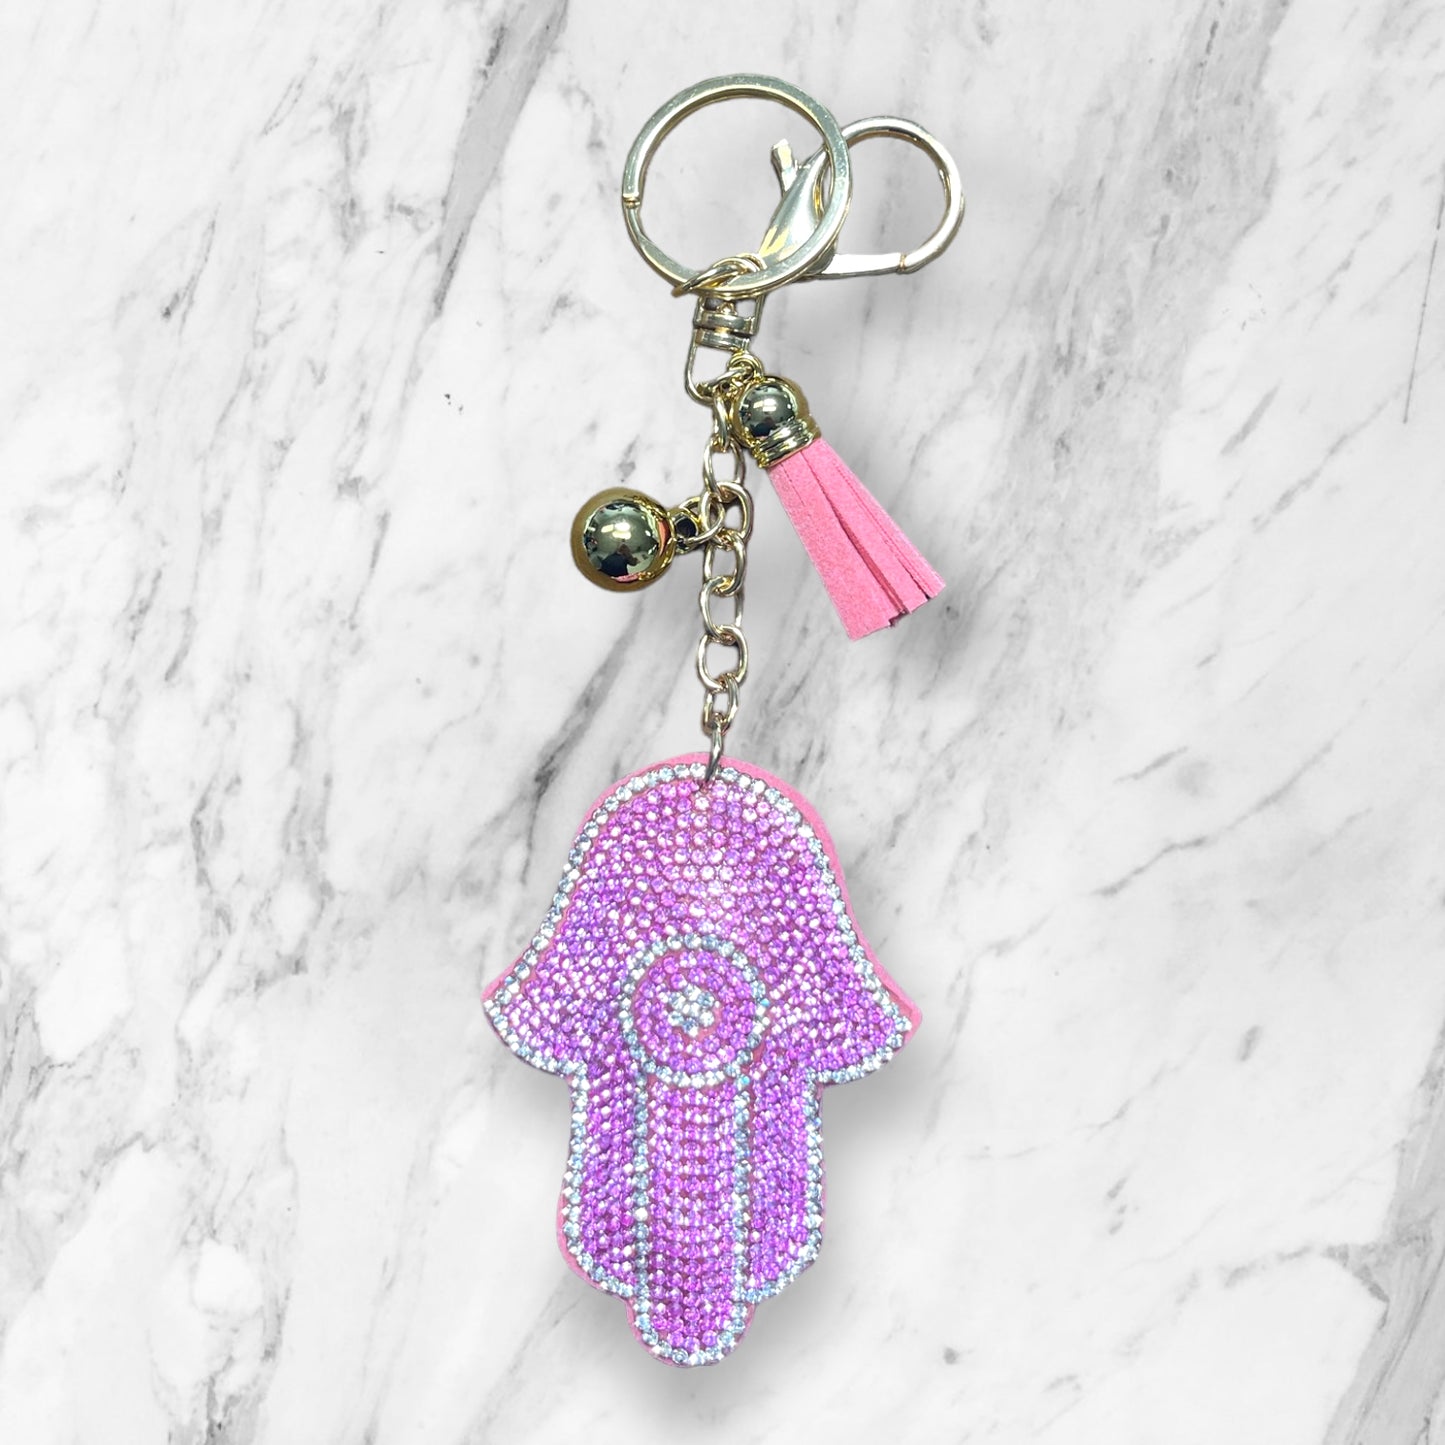 Soft puffy hamsa keychain with glitter stones 7.5cm